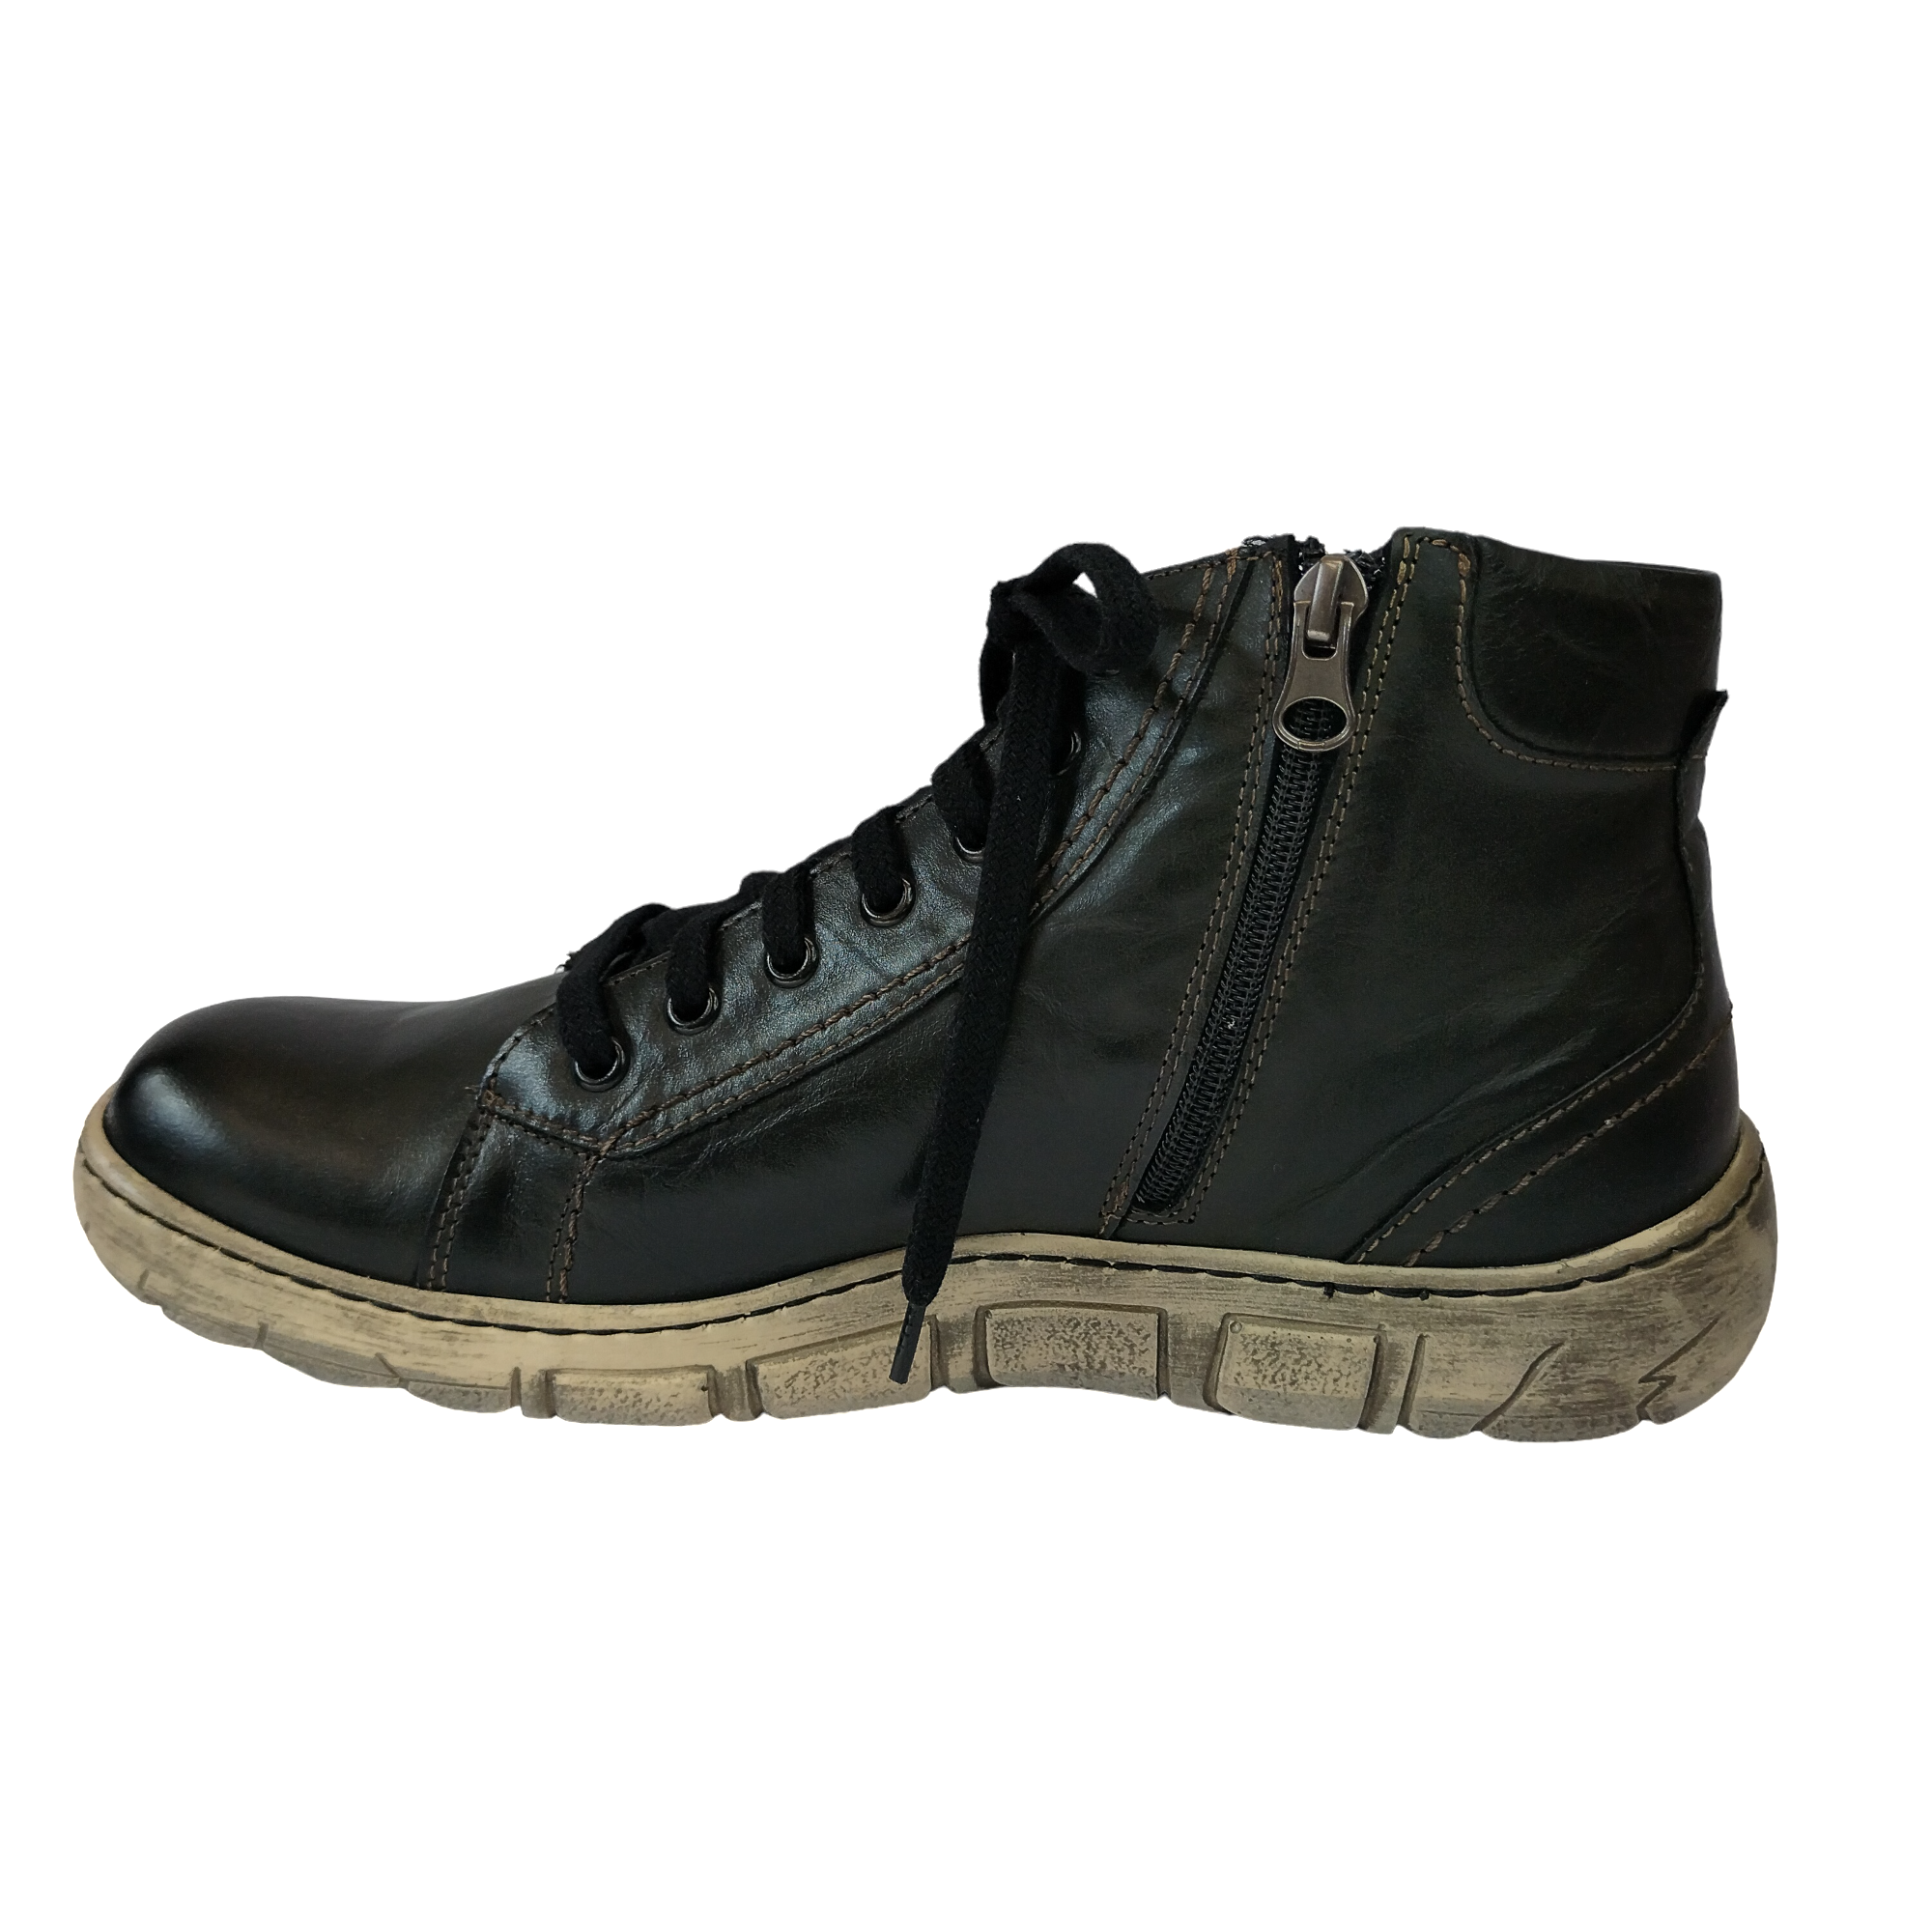 Kacper 3-1288 M - shoe&amp;me - Kacper - Boot - Boots, Mens, Winter